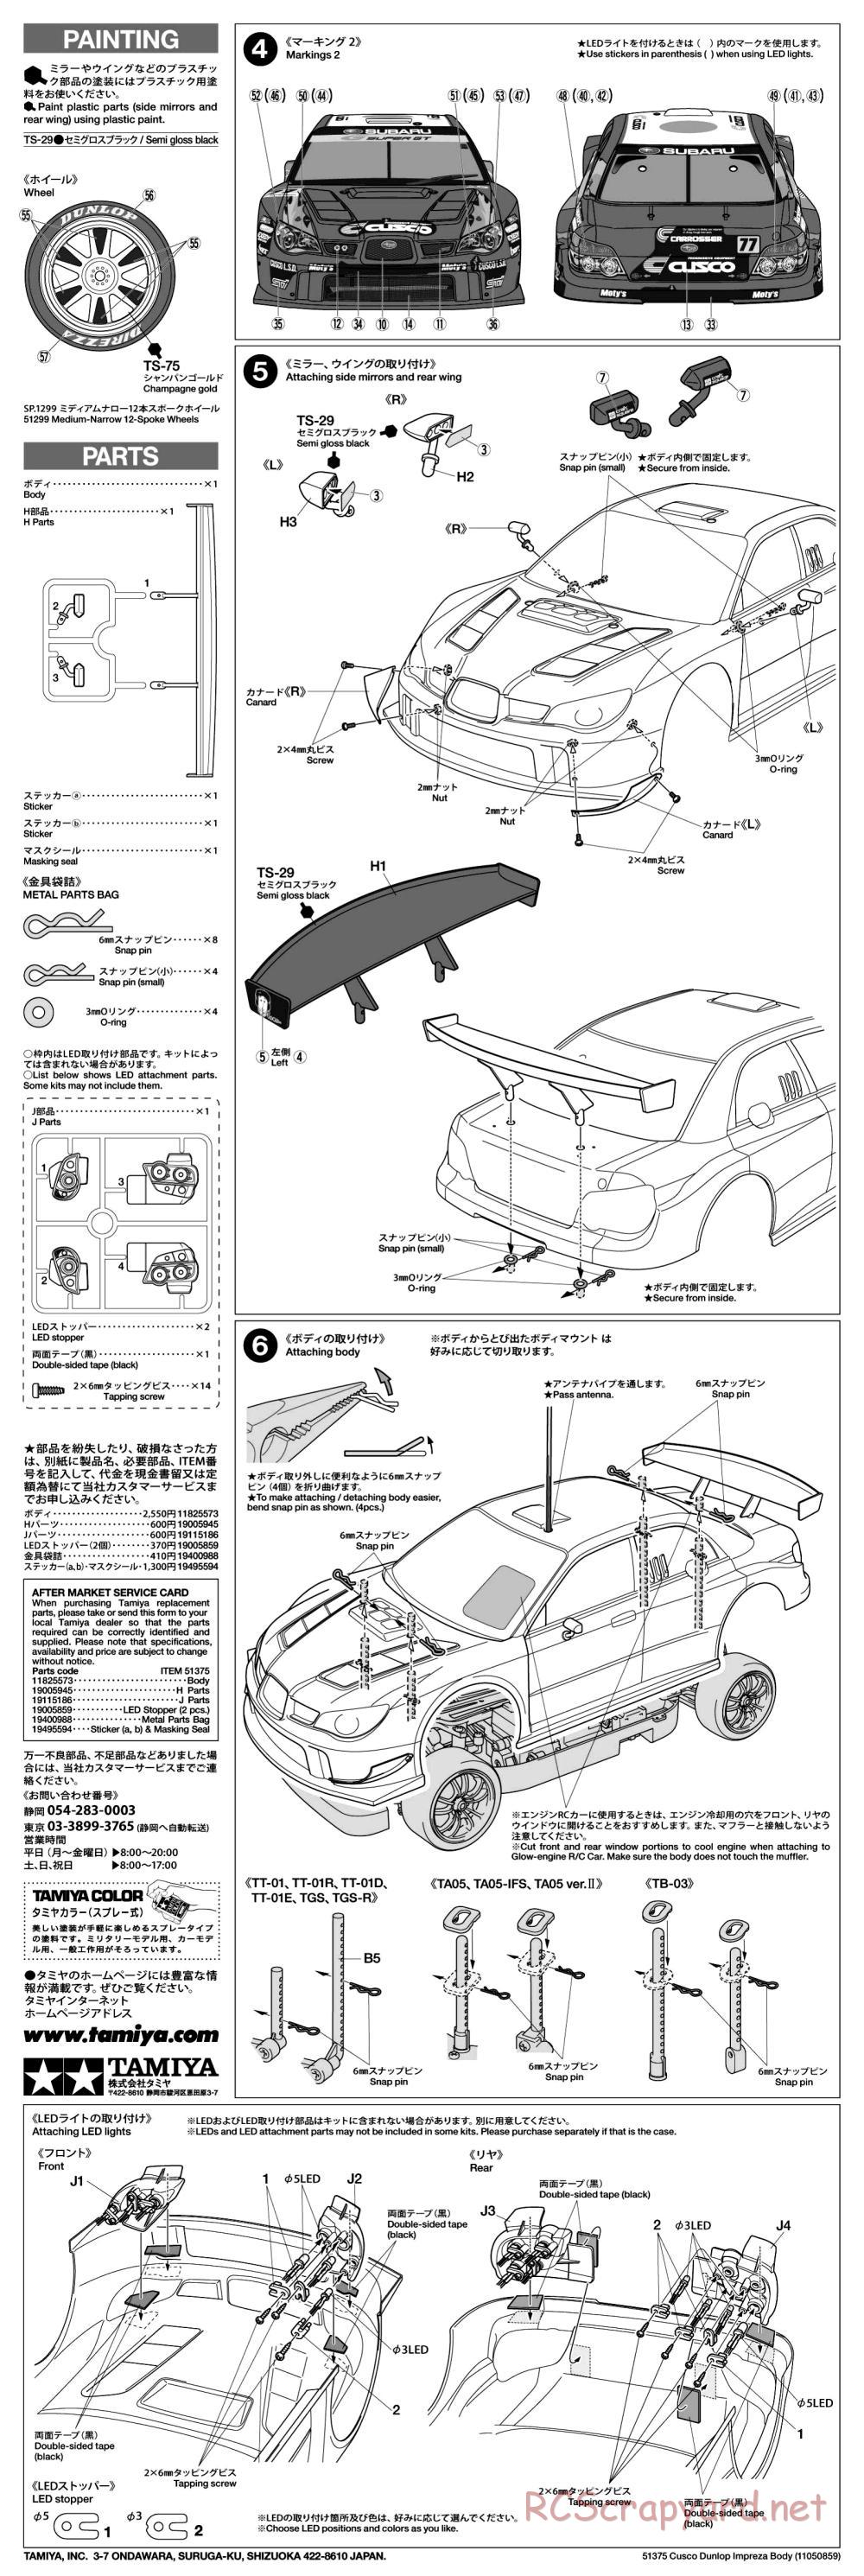 Tamiya - Cusco Dunlop Subaru Impreza - TA05 Ver.II Chassis - Body Manual - Page 2